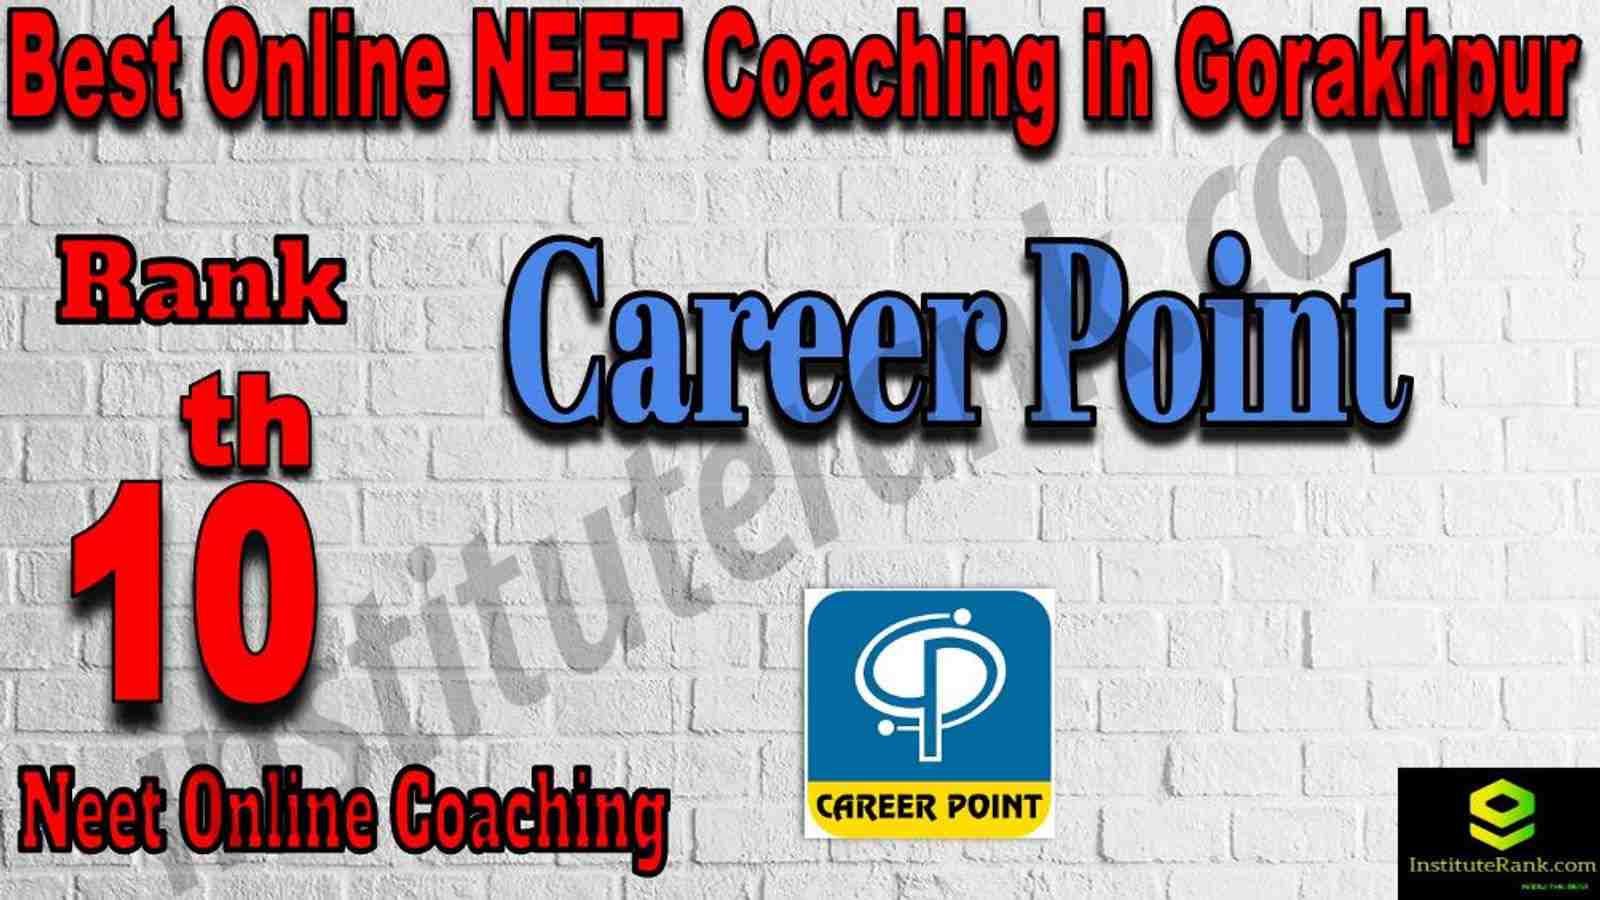 10th Best Online Neet Coaching in Gorakhpur